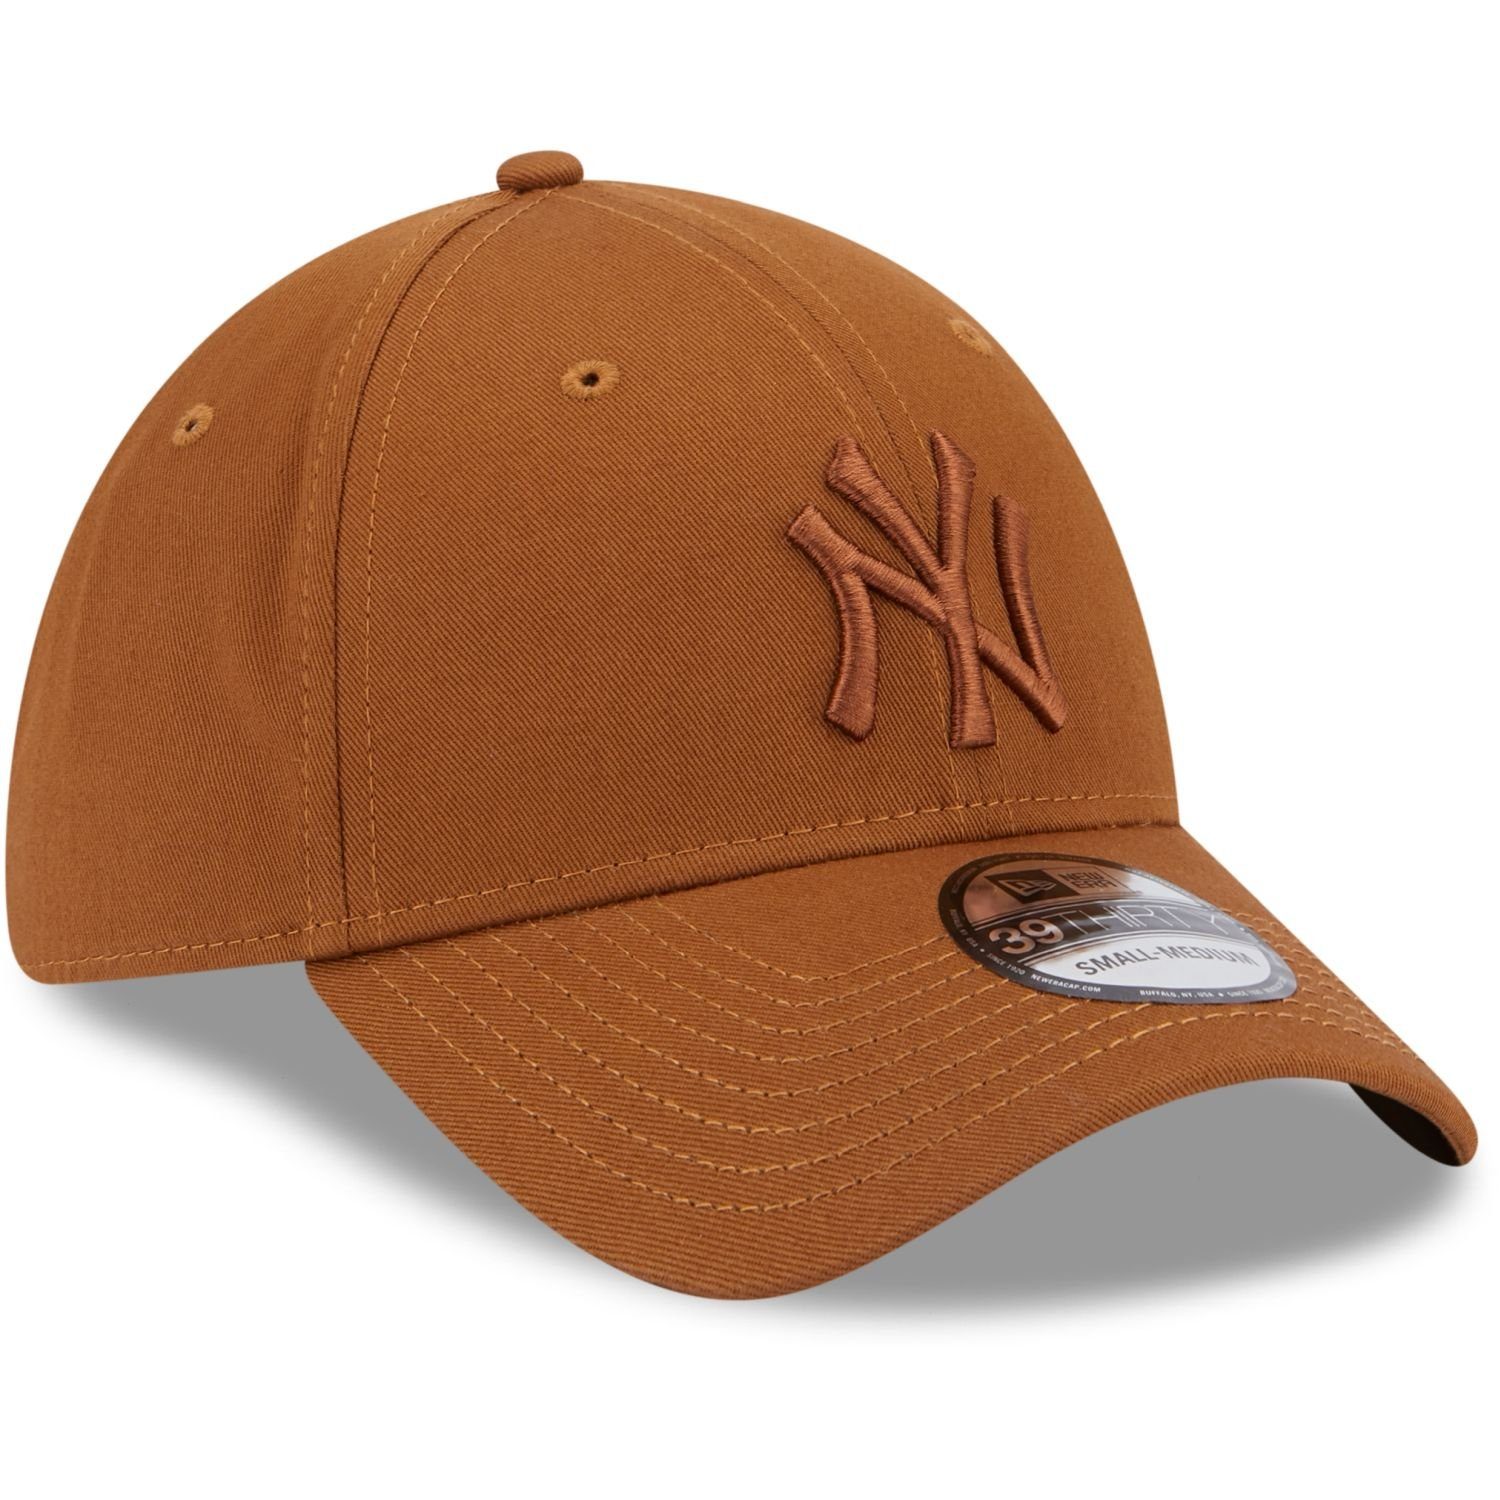 New York New Era 39Thirty Flex Cap Yankees peanut Stretch